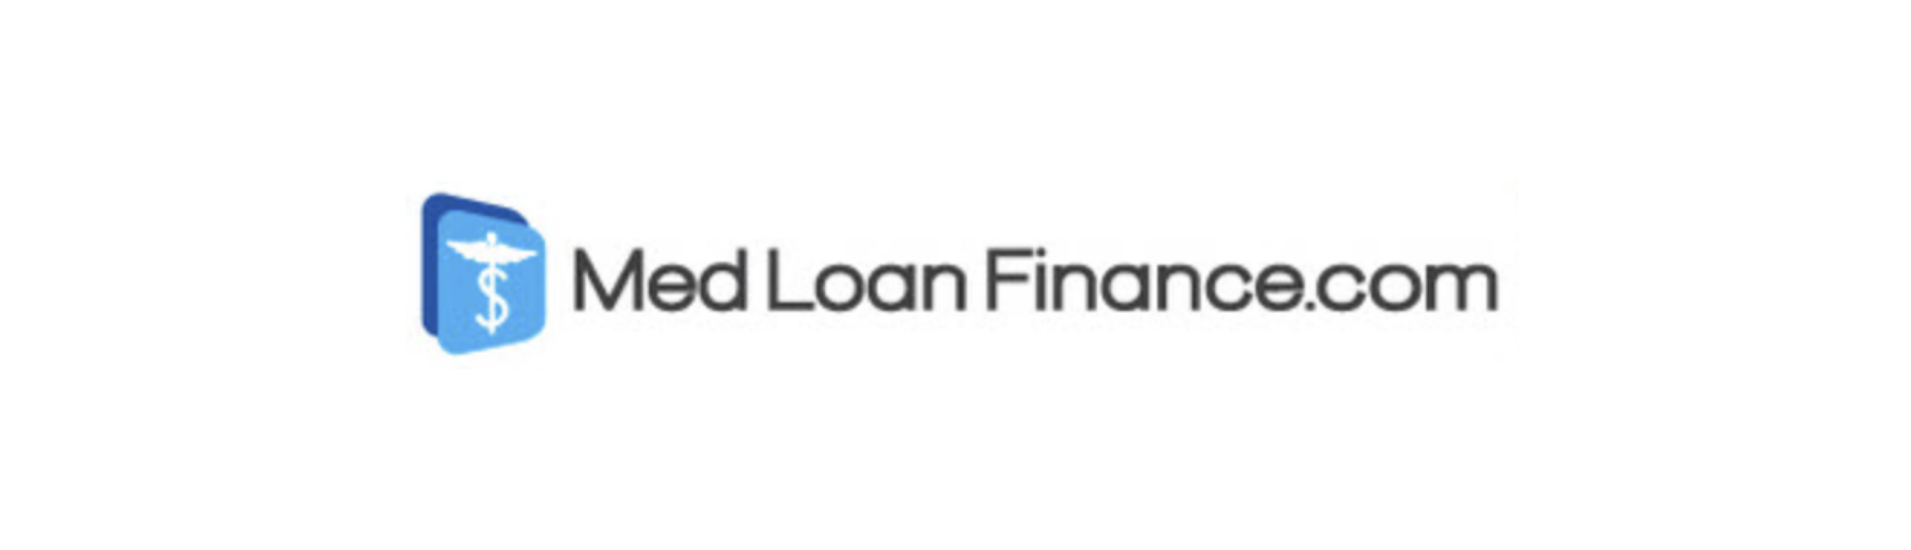 MedLoanFinance logo